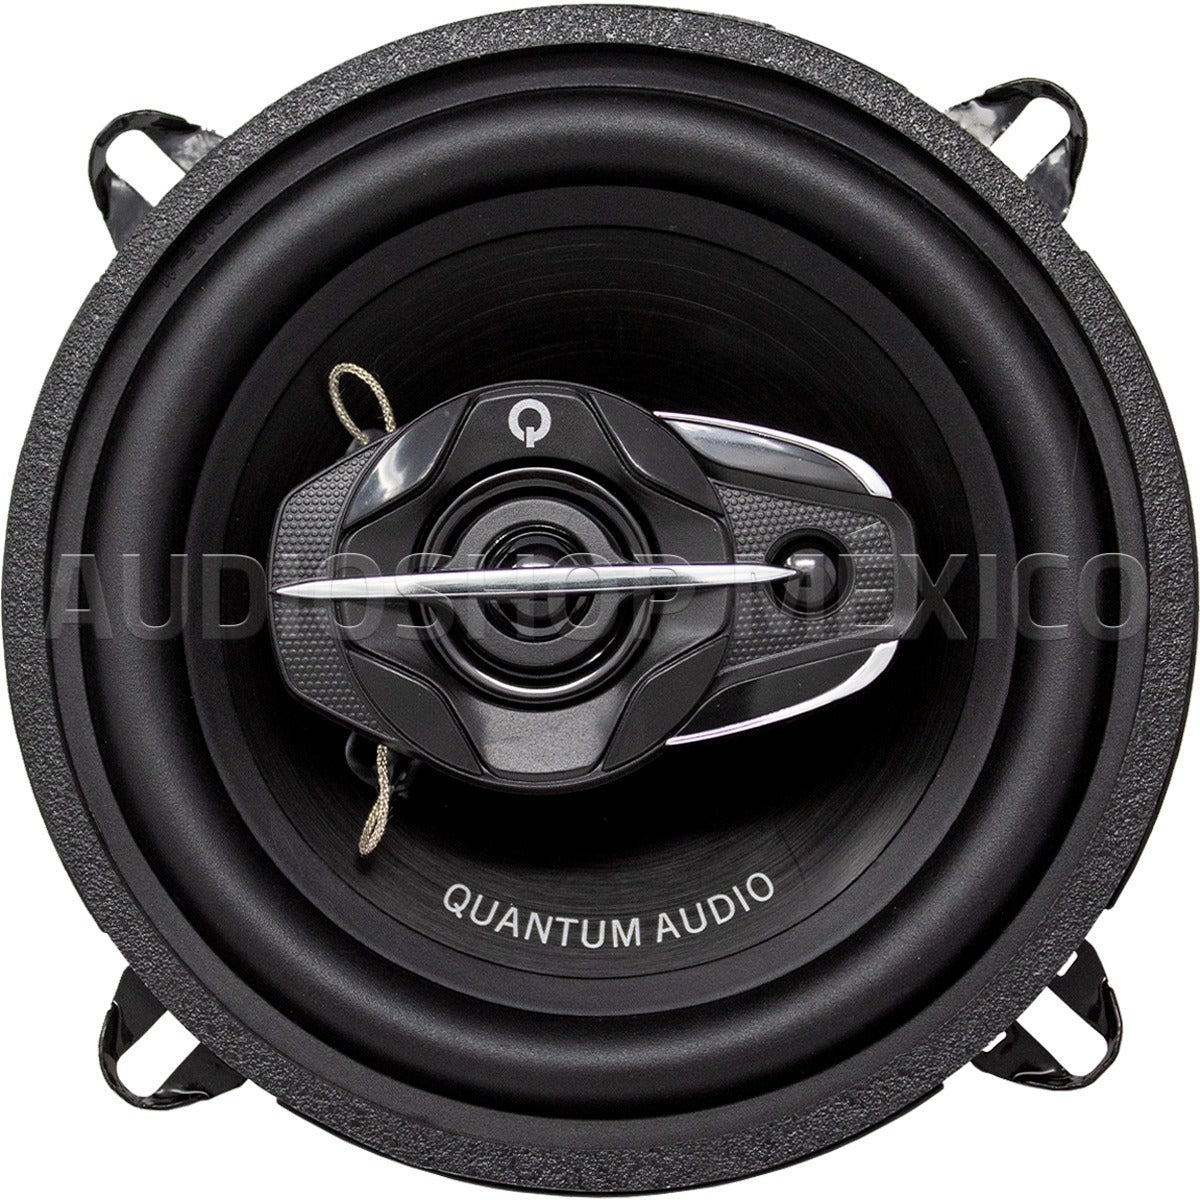 Bocinas Quantum Audio QRS50 140 Watts 5.25 Pulgadas 3 Vías QRS Series